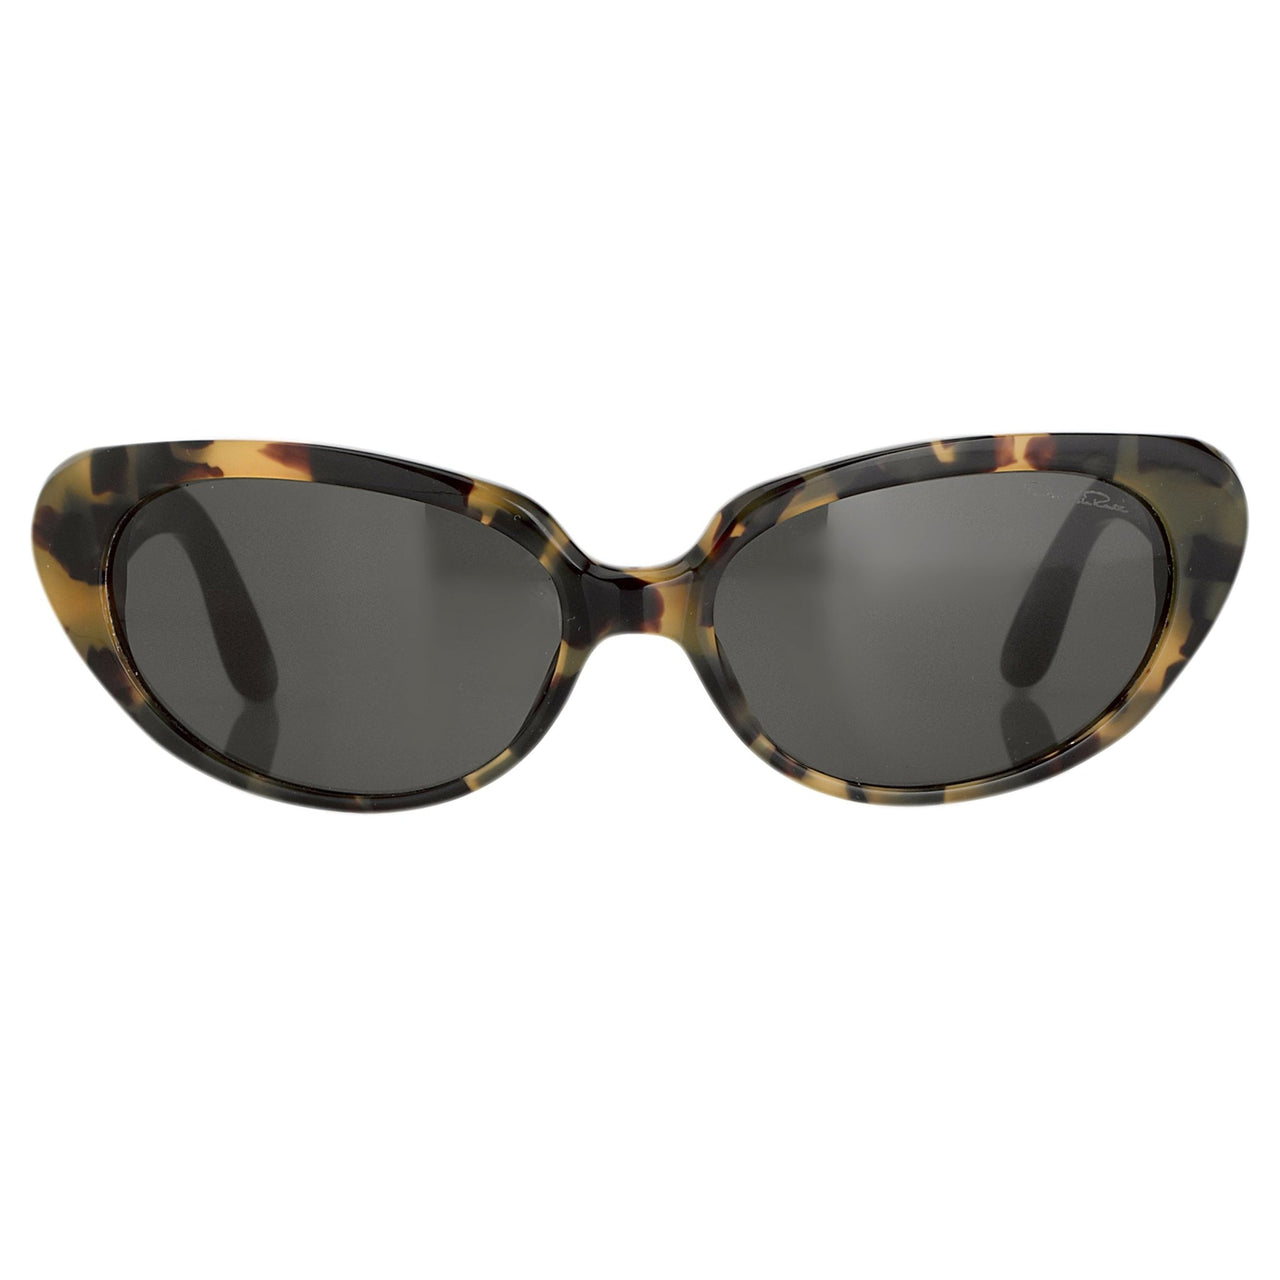 Oscar De La Renta Women Sunglasses Sandalwood Oval Tortoise and Dark Grey Lenses Category 3 - ODLR43C7SUN - Watches & Crystals